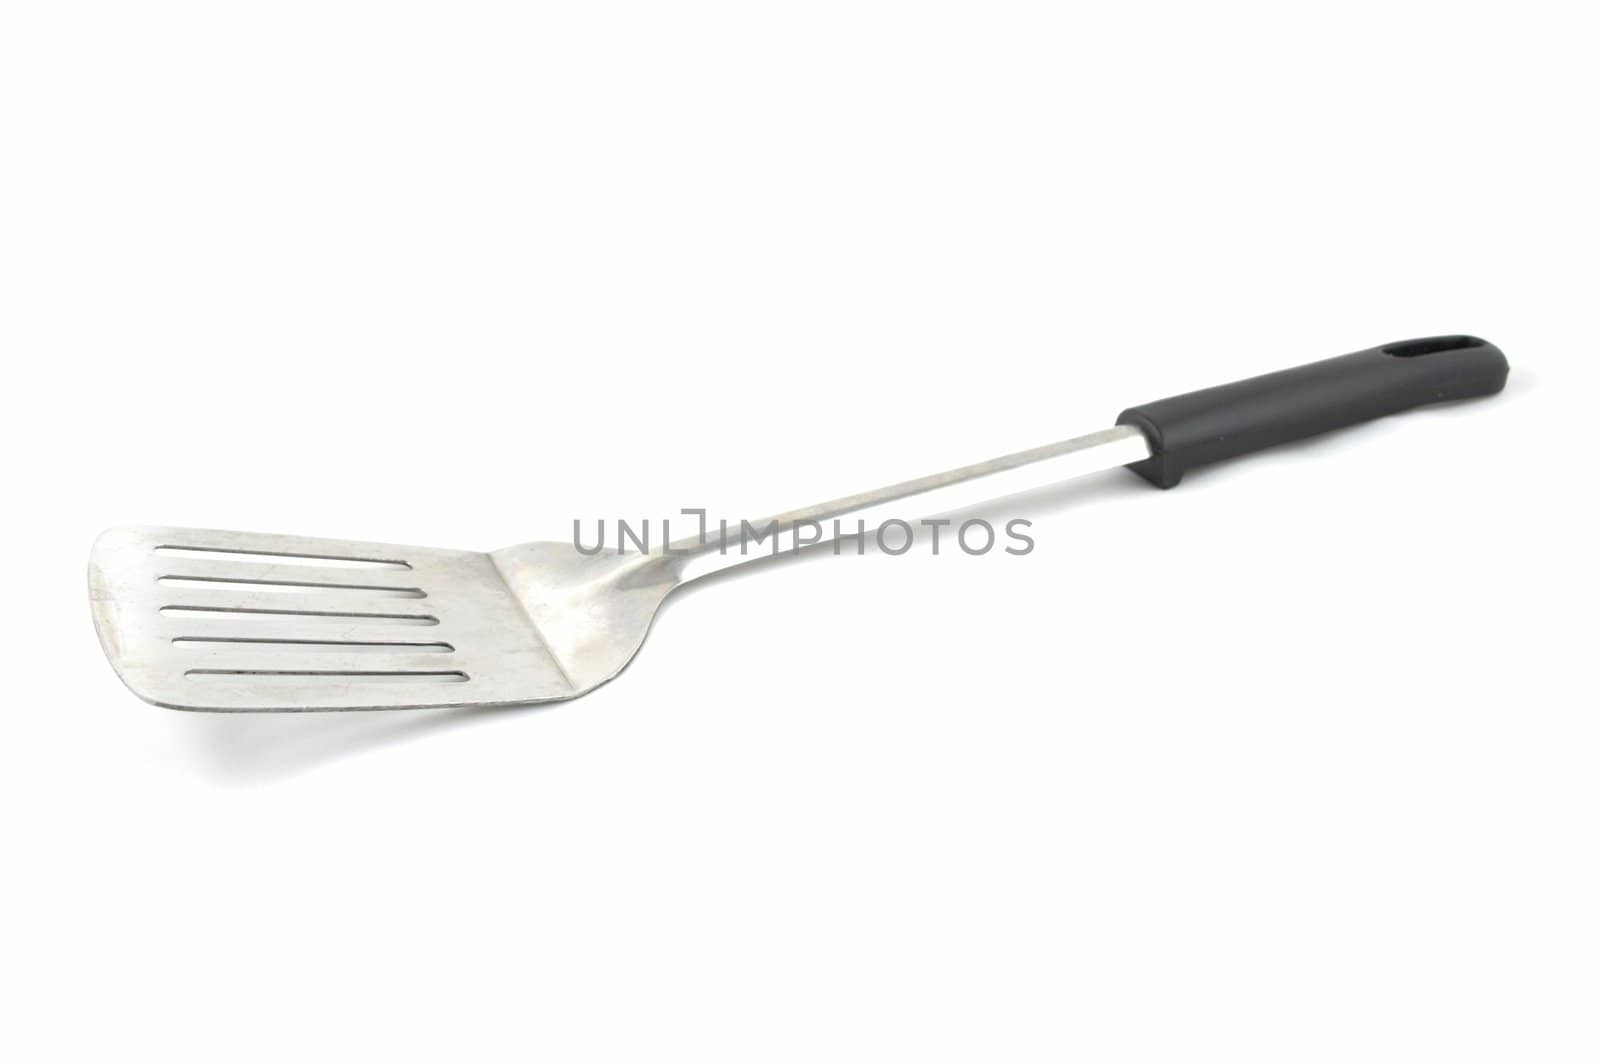 A kitchen spatula on a white background.